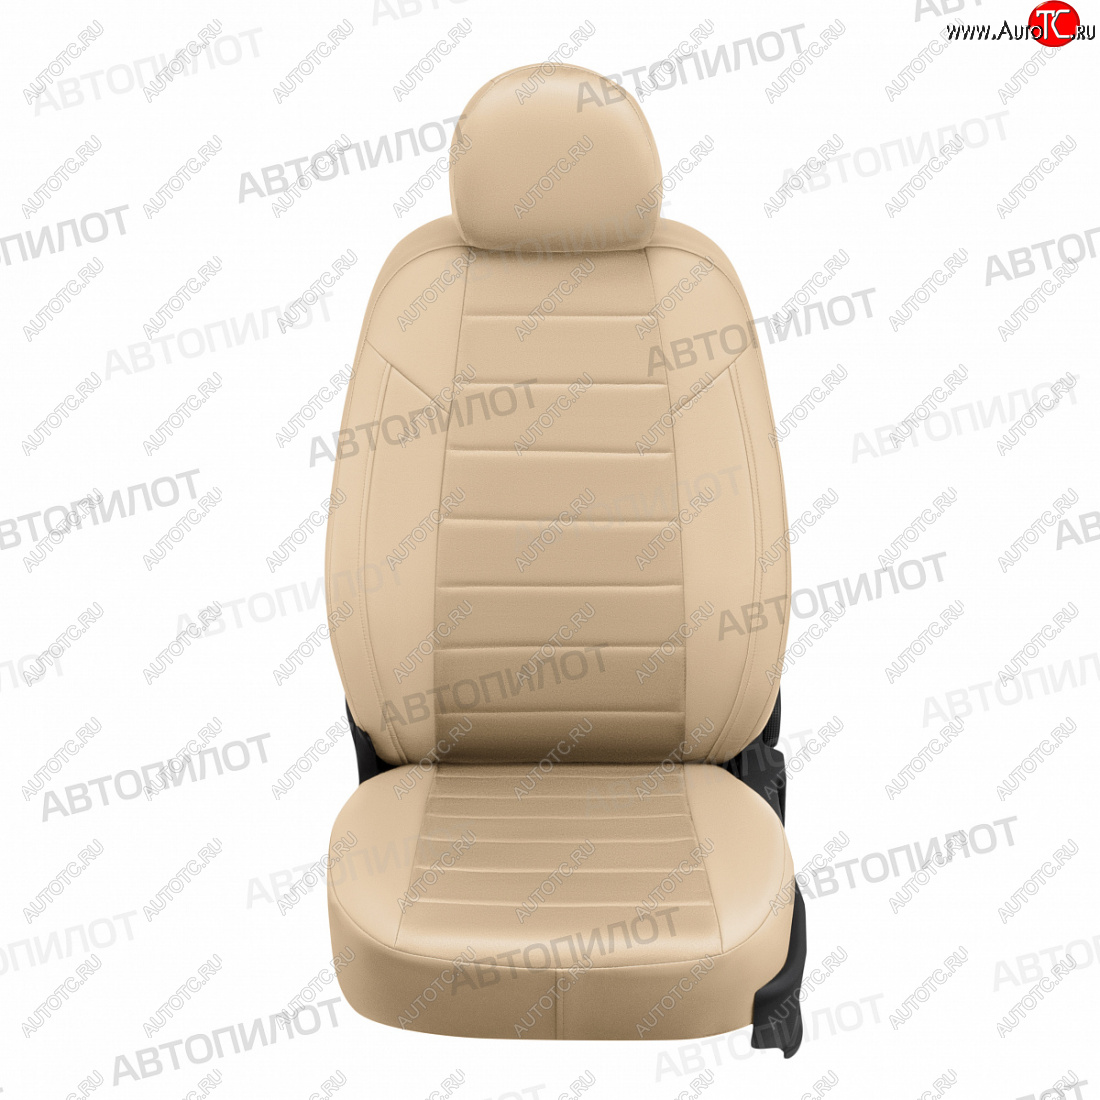 16 899 р. Чехлы сидений (экокожа/алькантара, 7 мест) Автопилот  Hyundai Trajet (1999-2008) (бежевый)